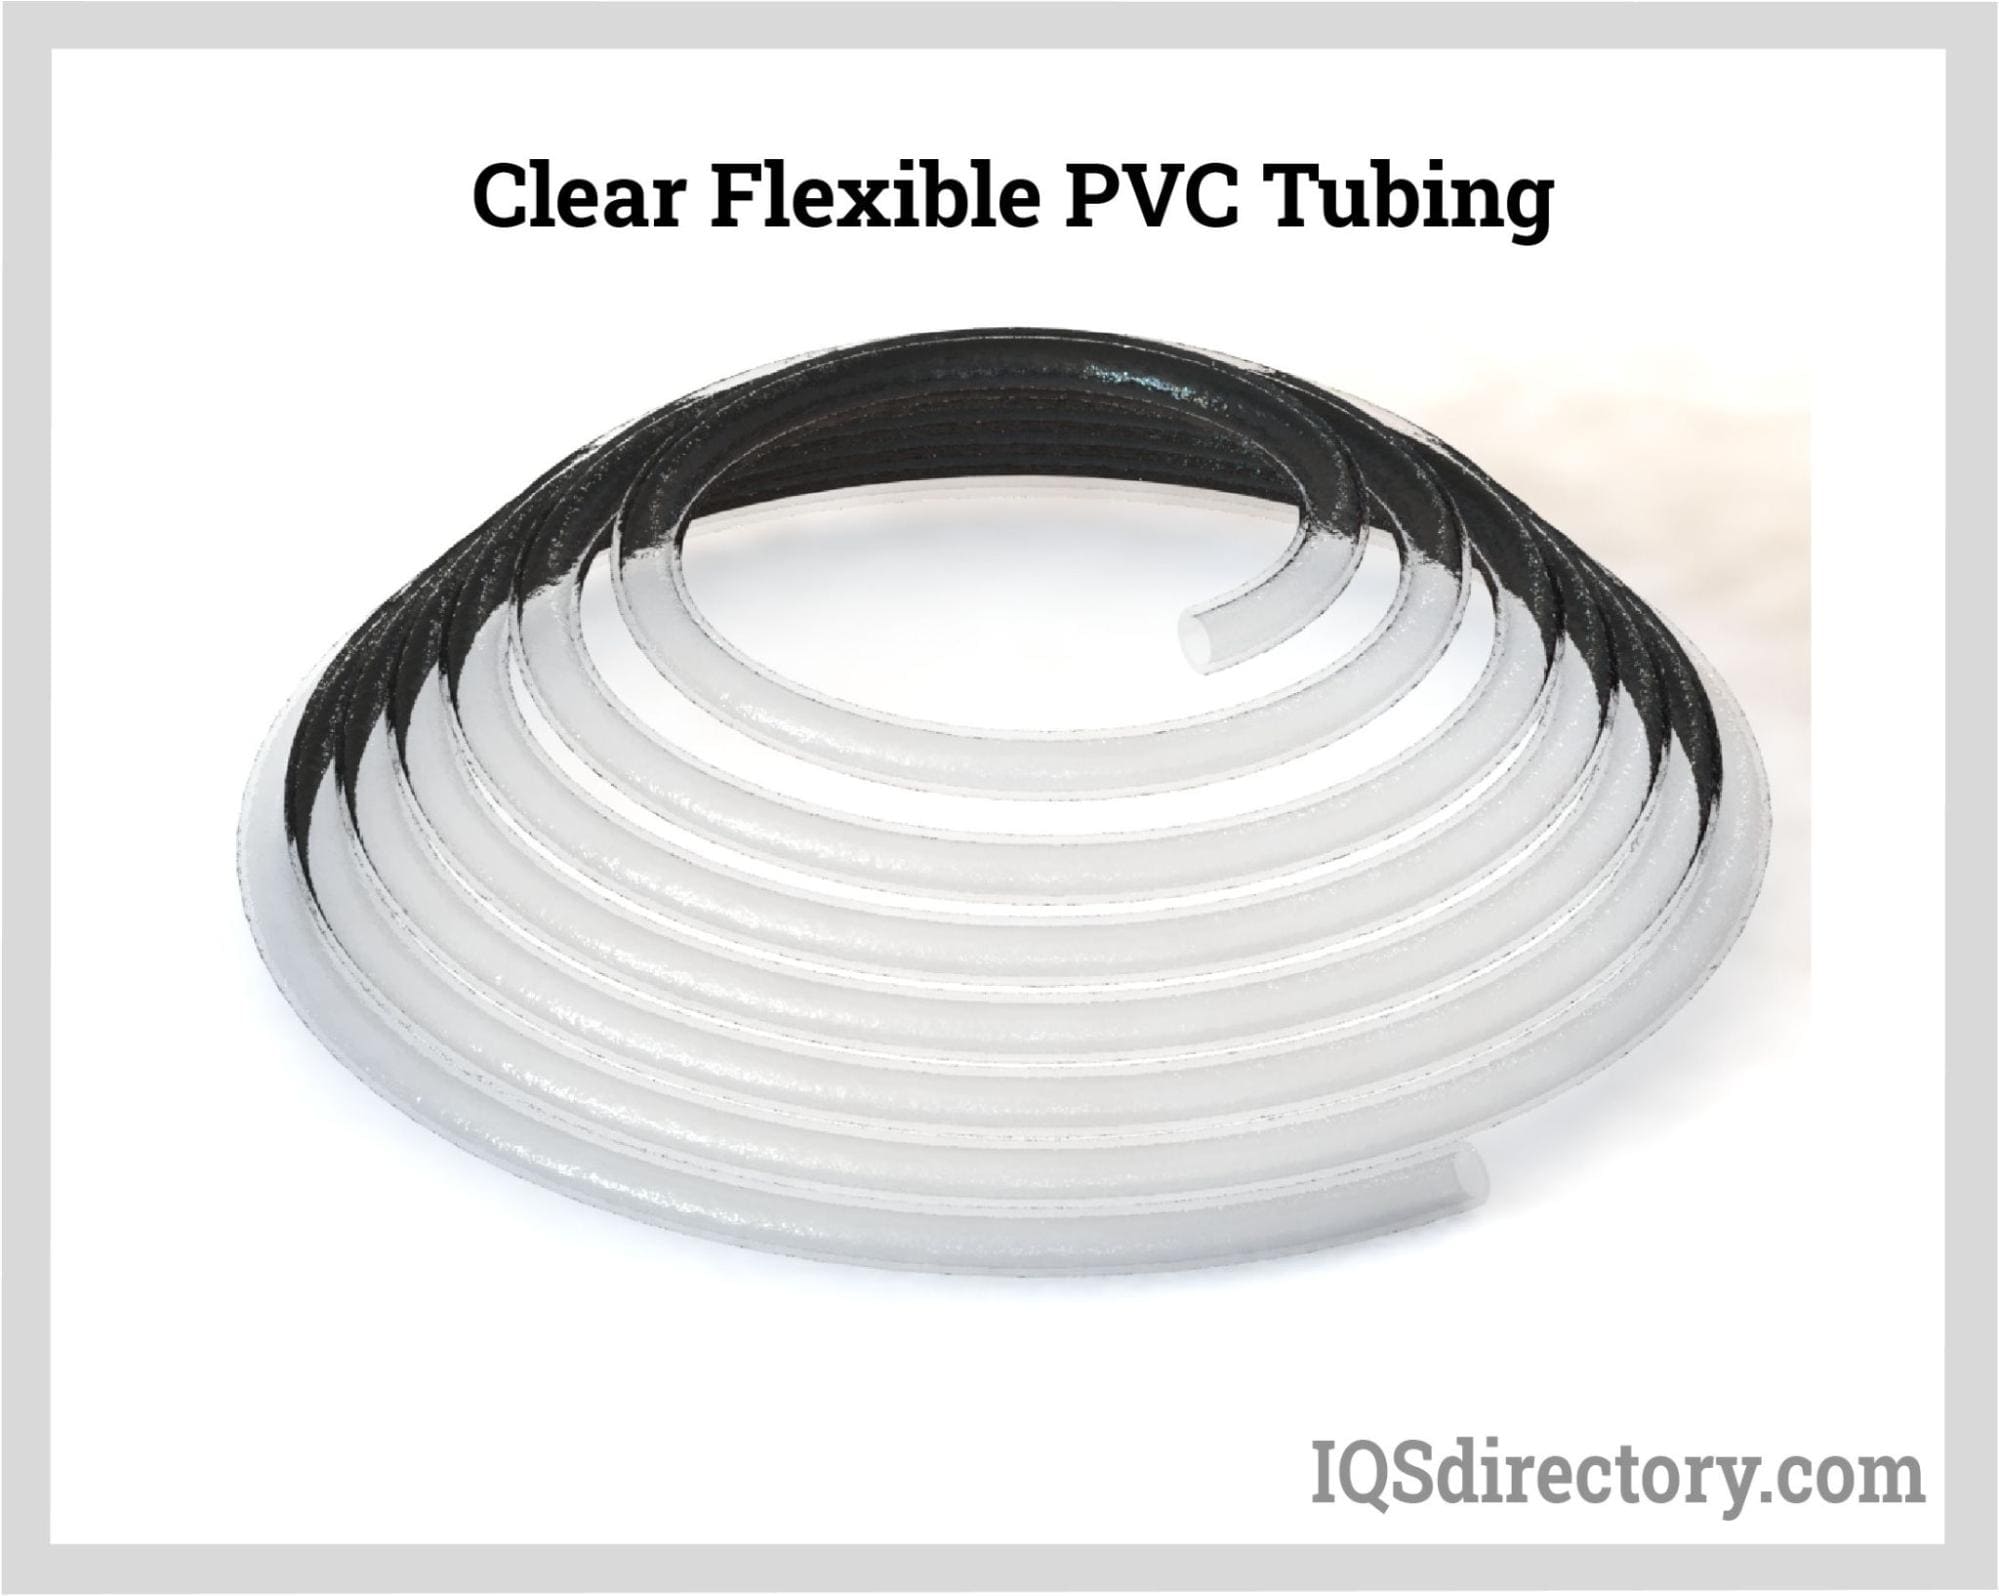 Clear Flexible PVC Tubing